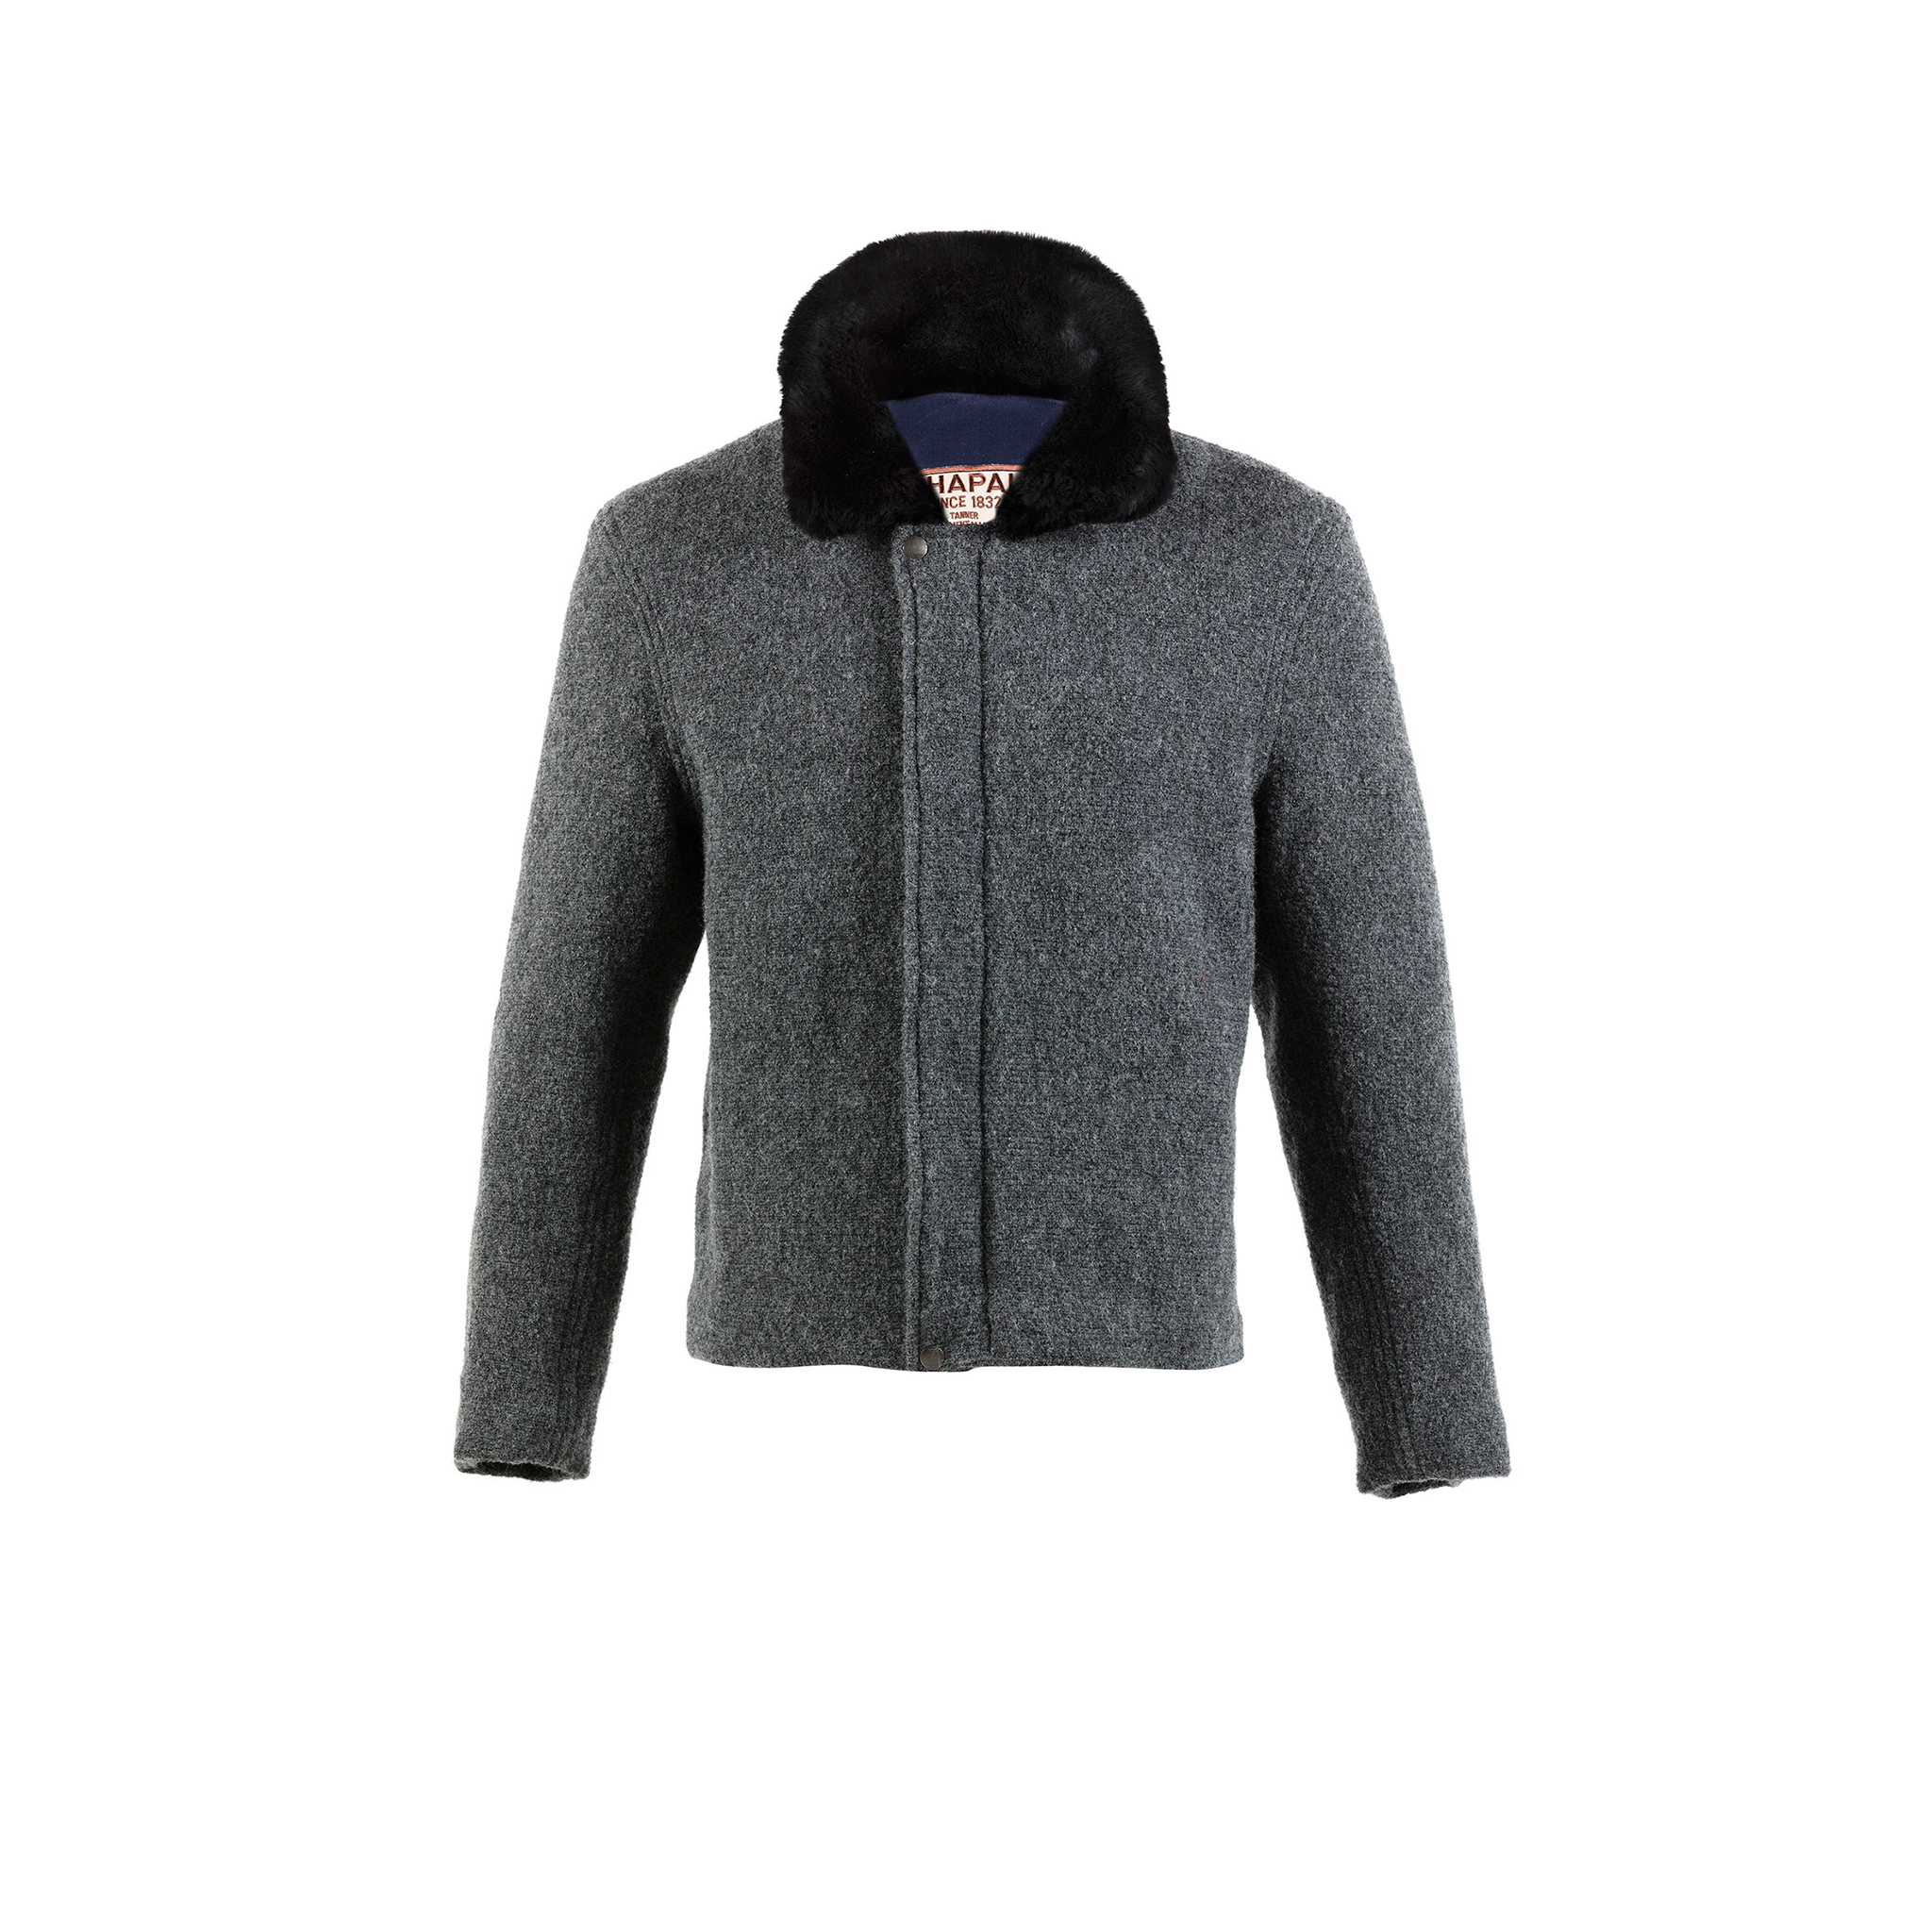 Bomber Jacket - Merino wool - Grey color